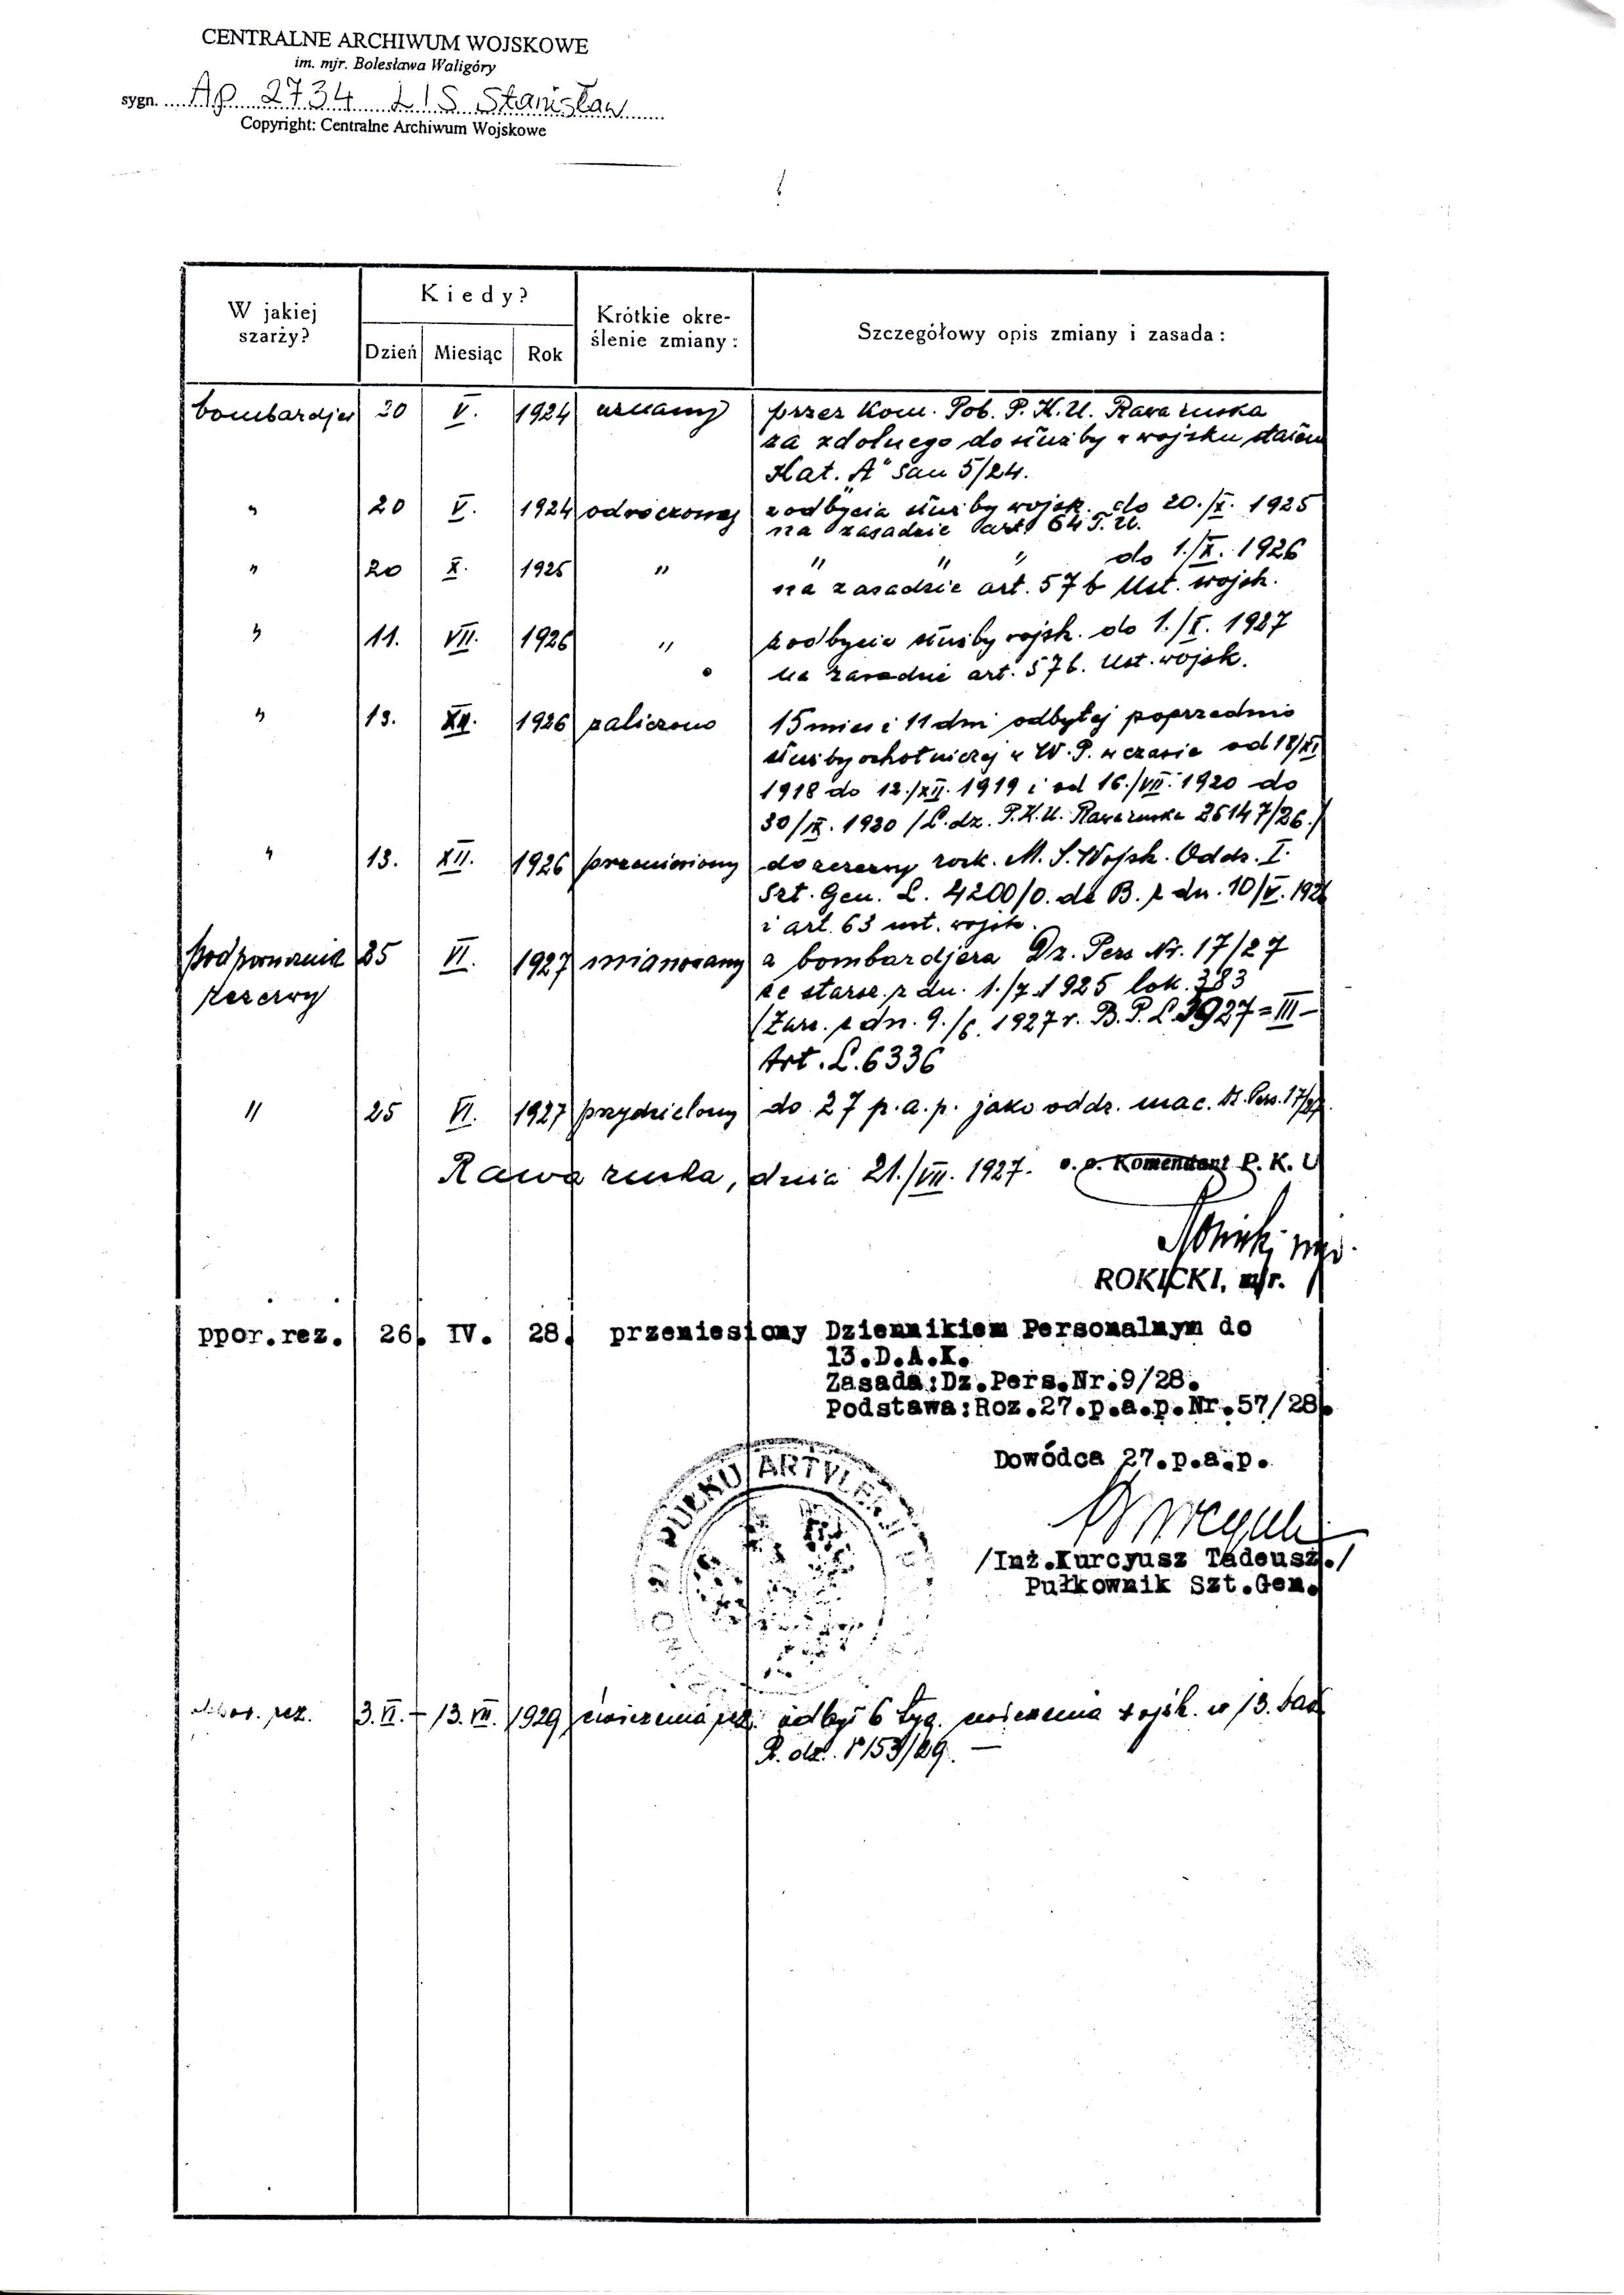 Stanislaw Lis registration card 1929 Page 3.jpg